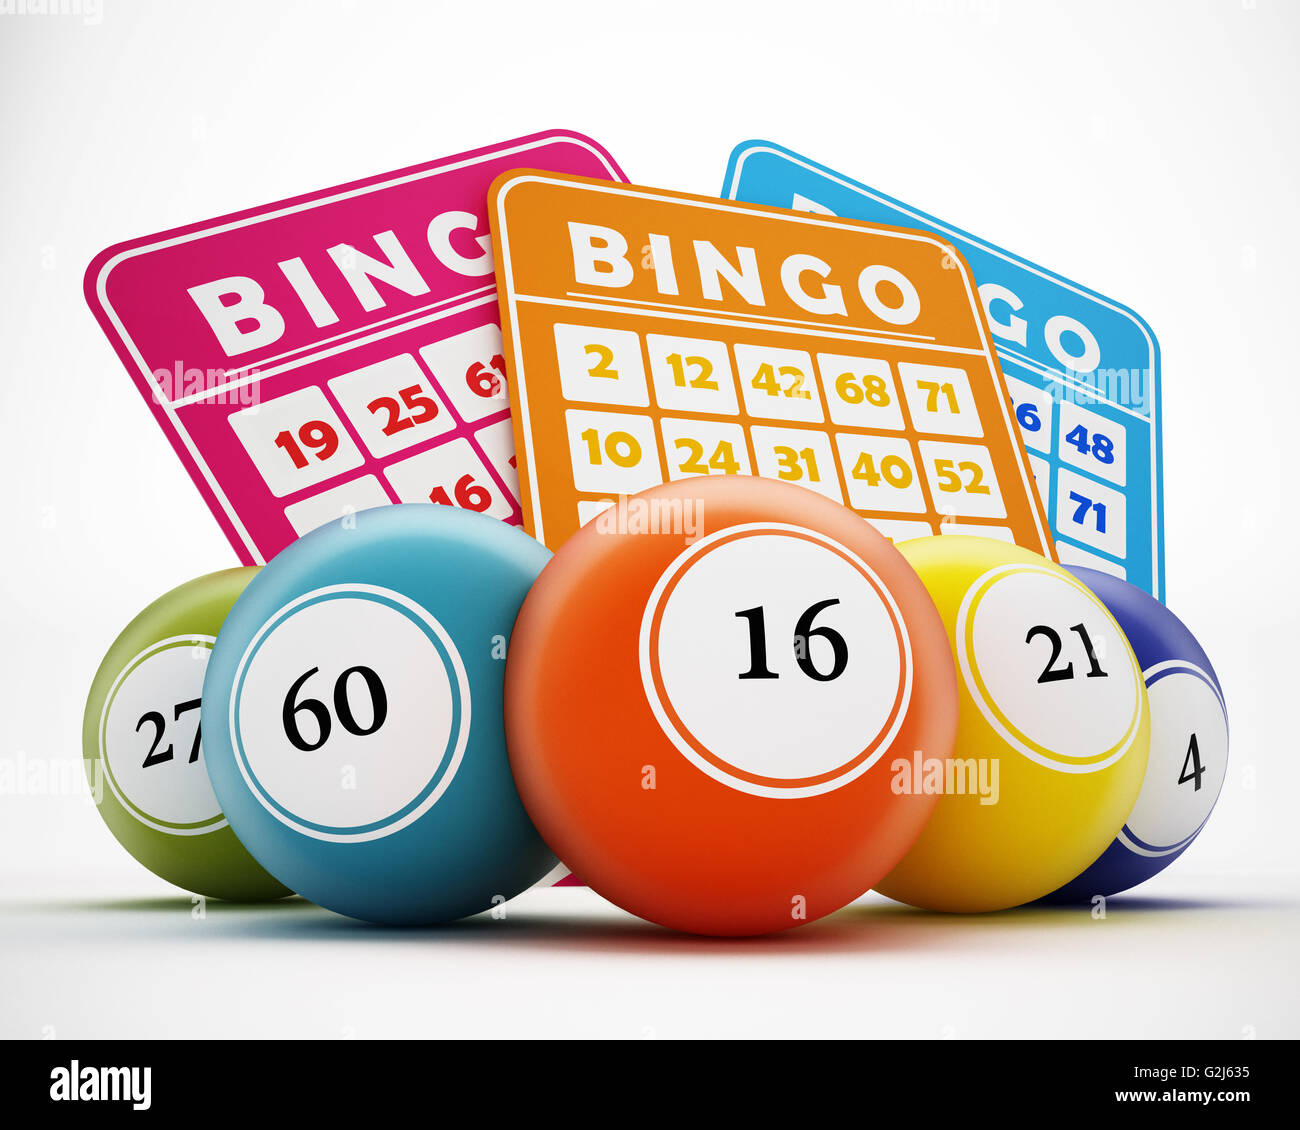 Bingo balls with cage